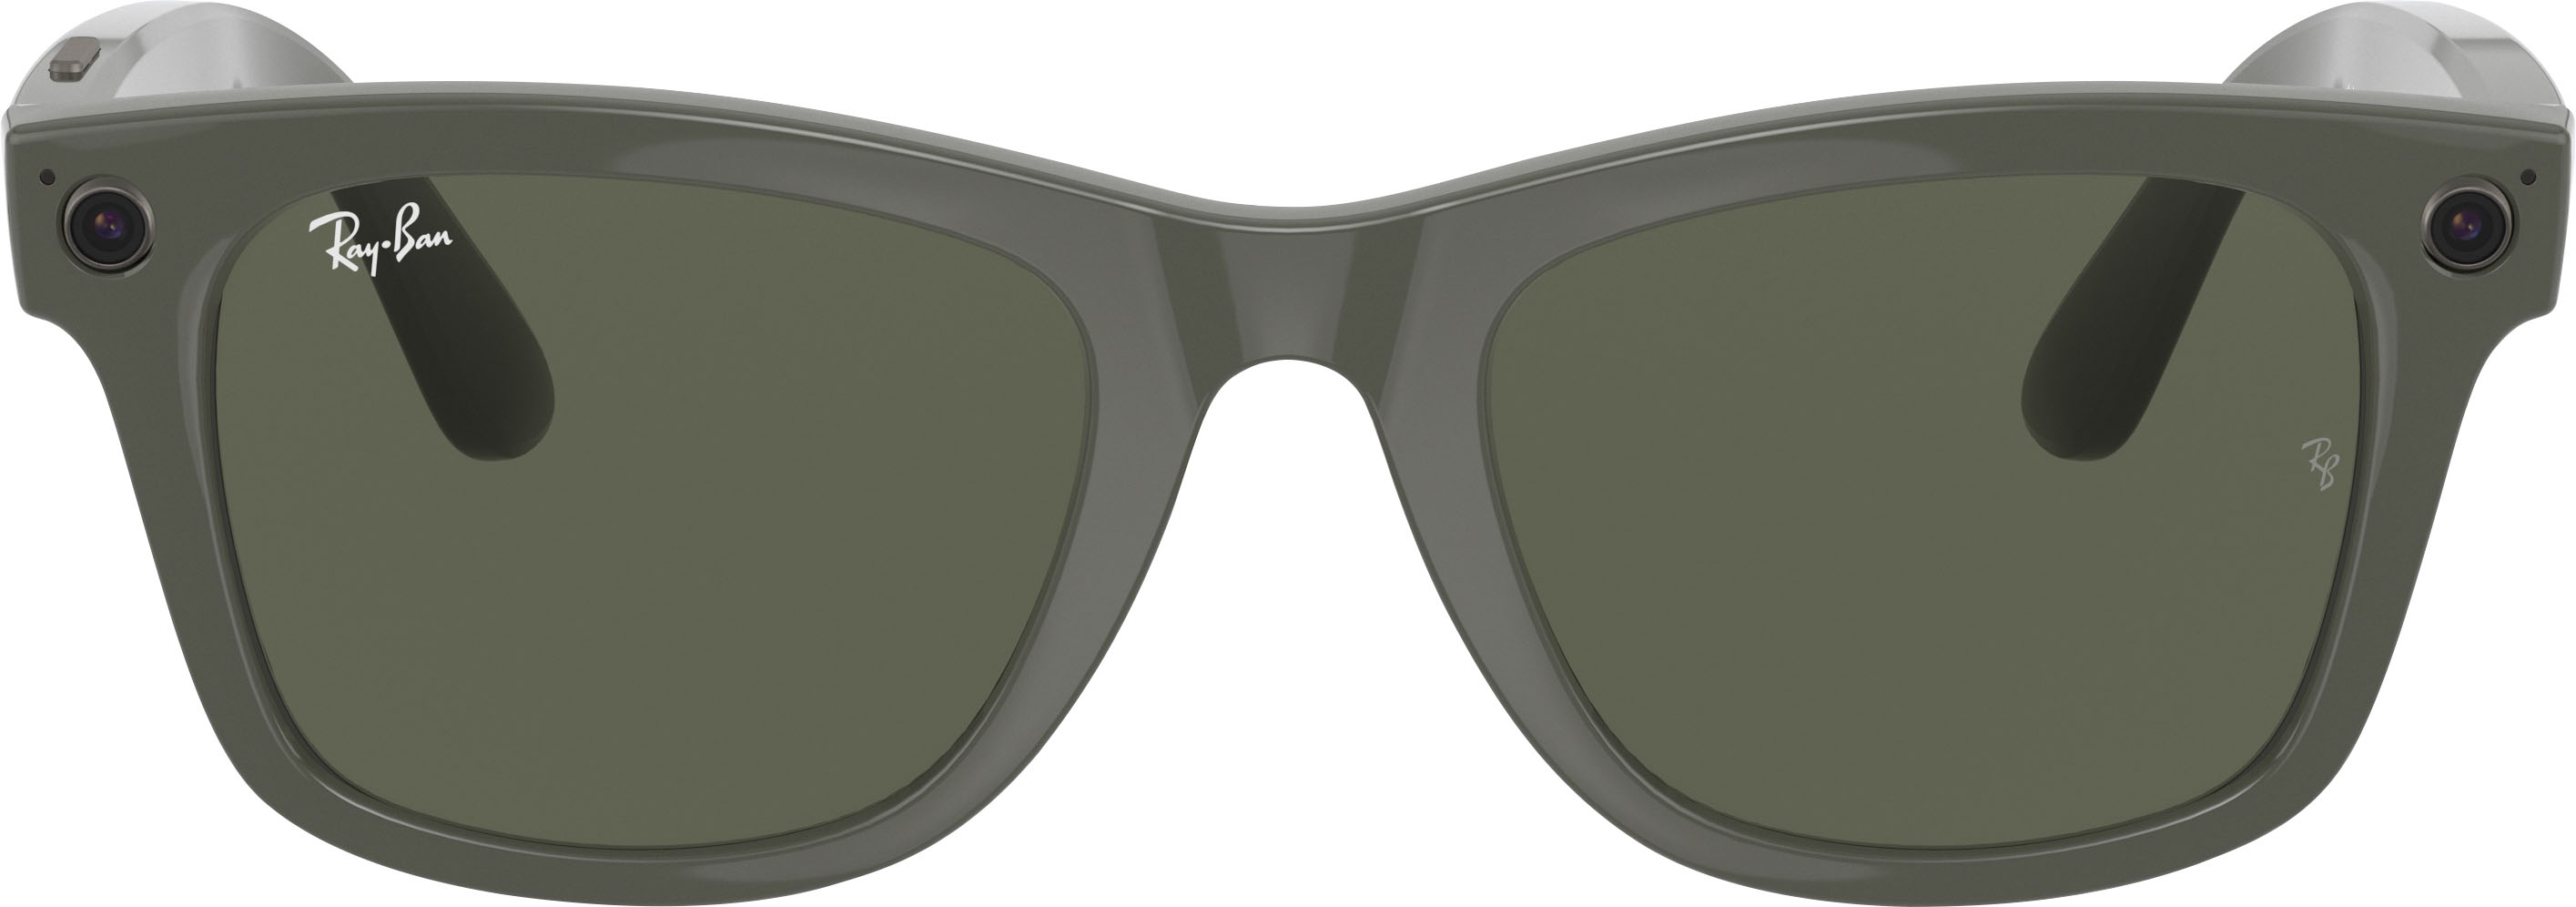 Angle View: Ray-Ban - Stories Wayfarer Smart Glasses - Shiny Olive/Transitions G-15  Green